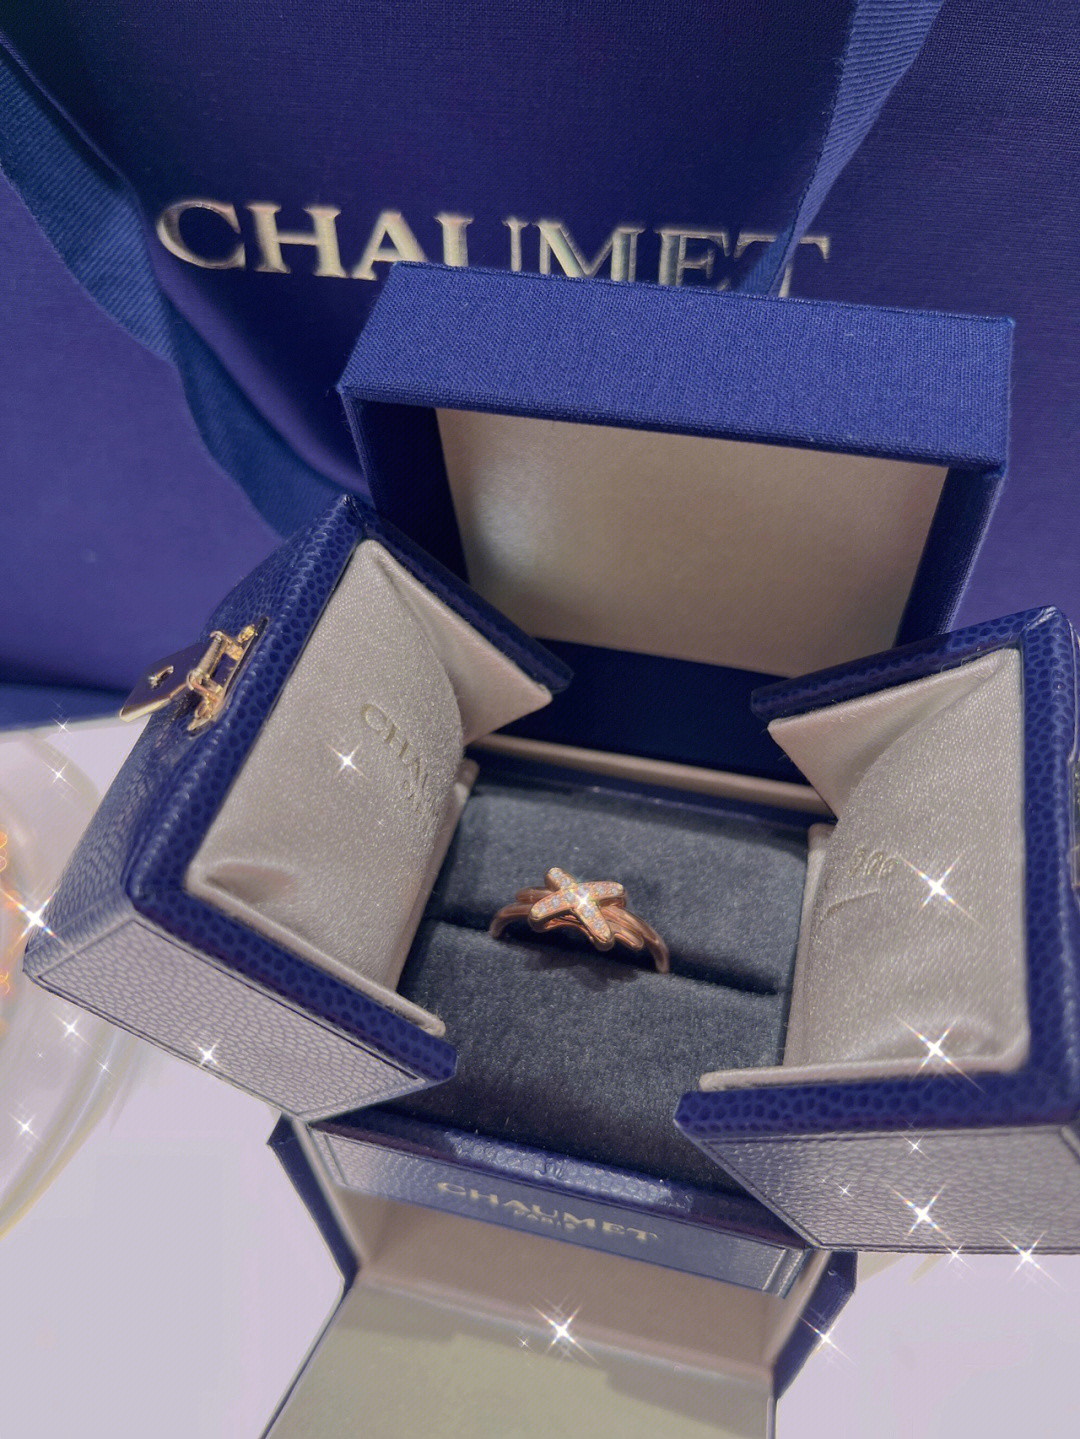 chaumet戒指陶瓷戒指图片